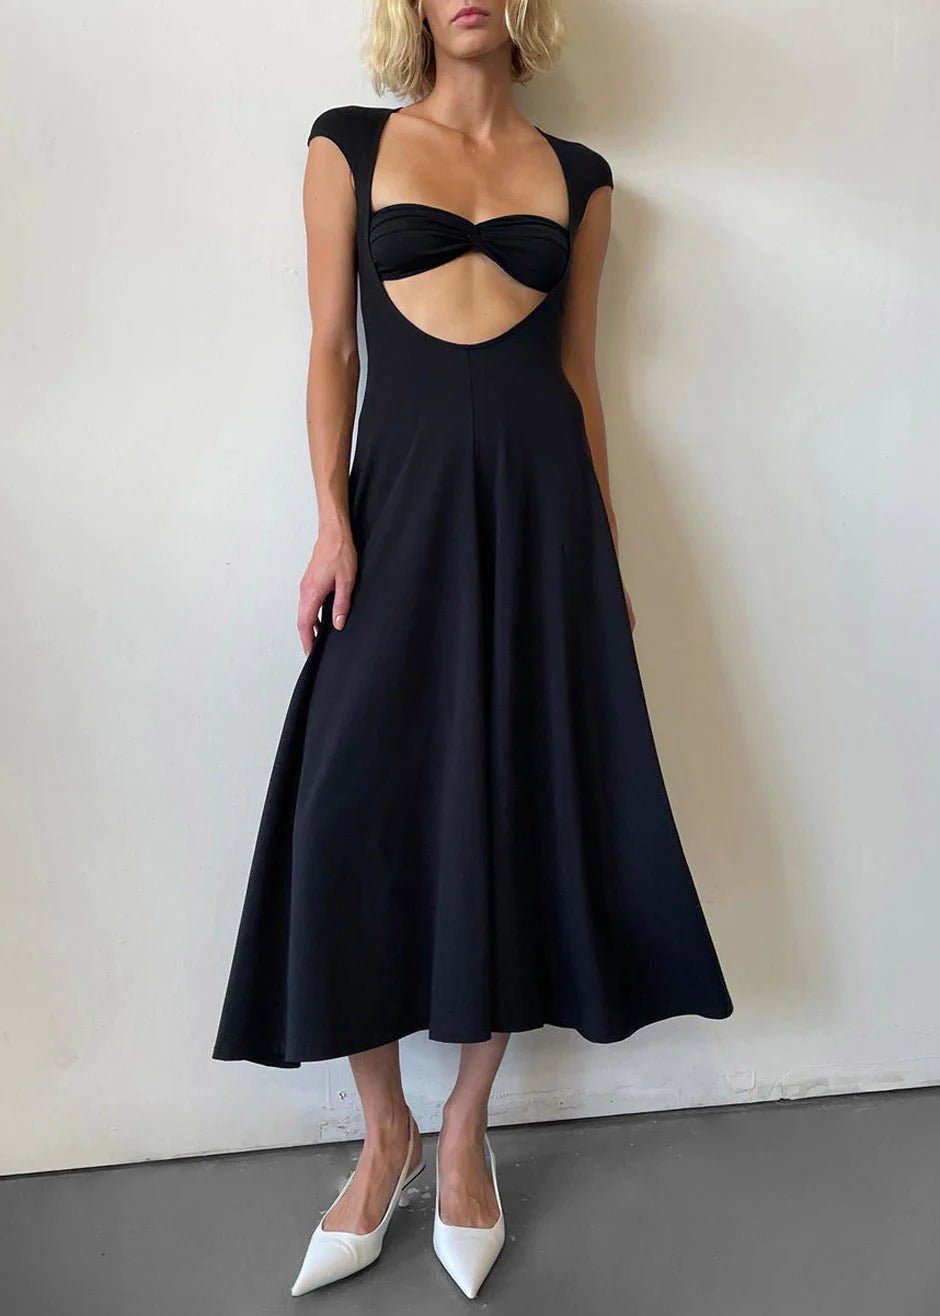 Beaufille Baes Dress in Black – Auralie